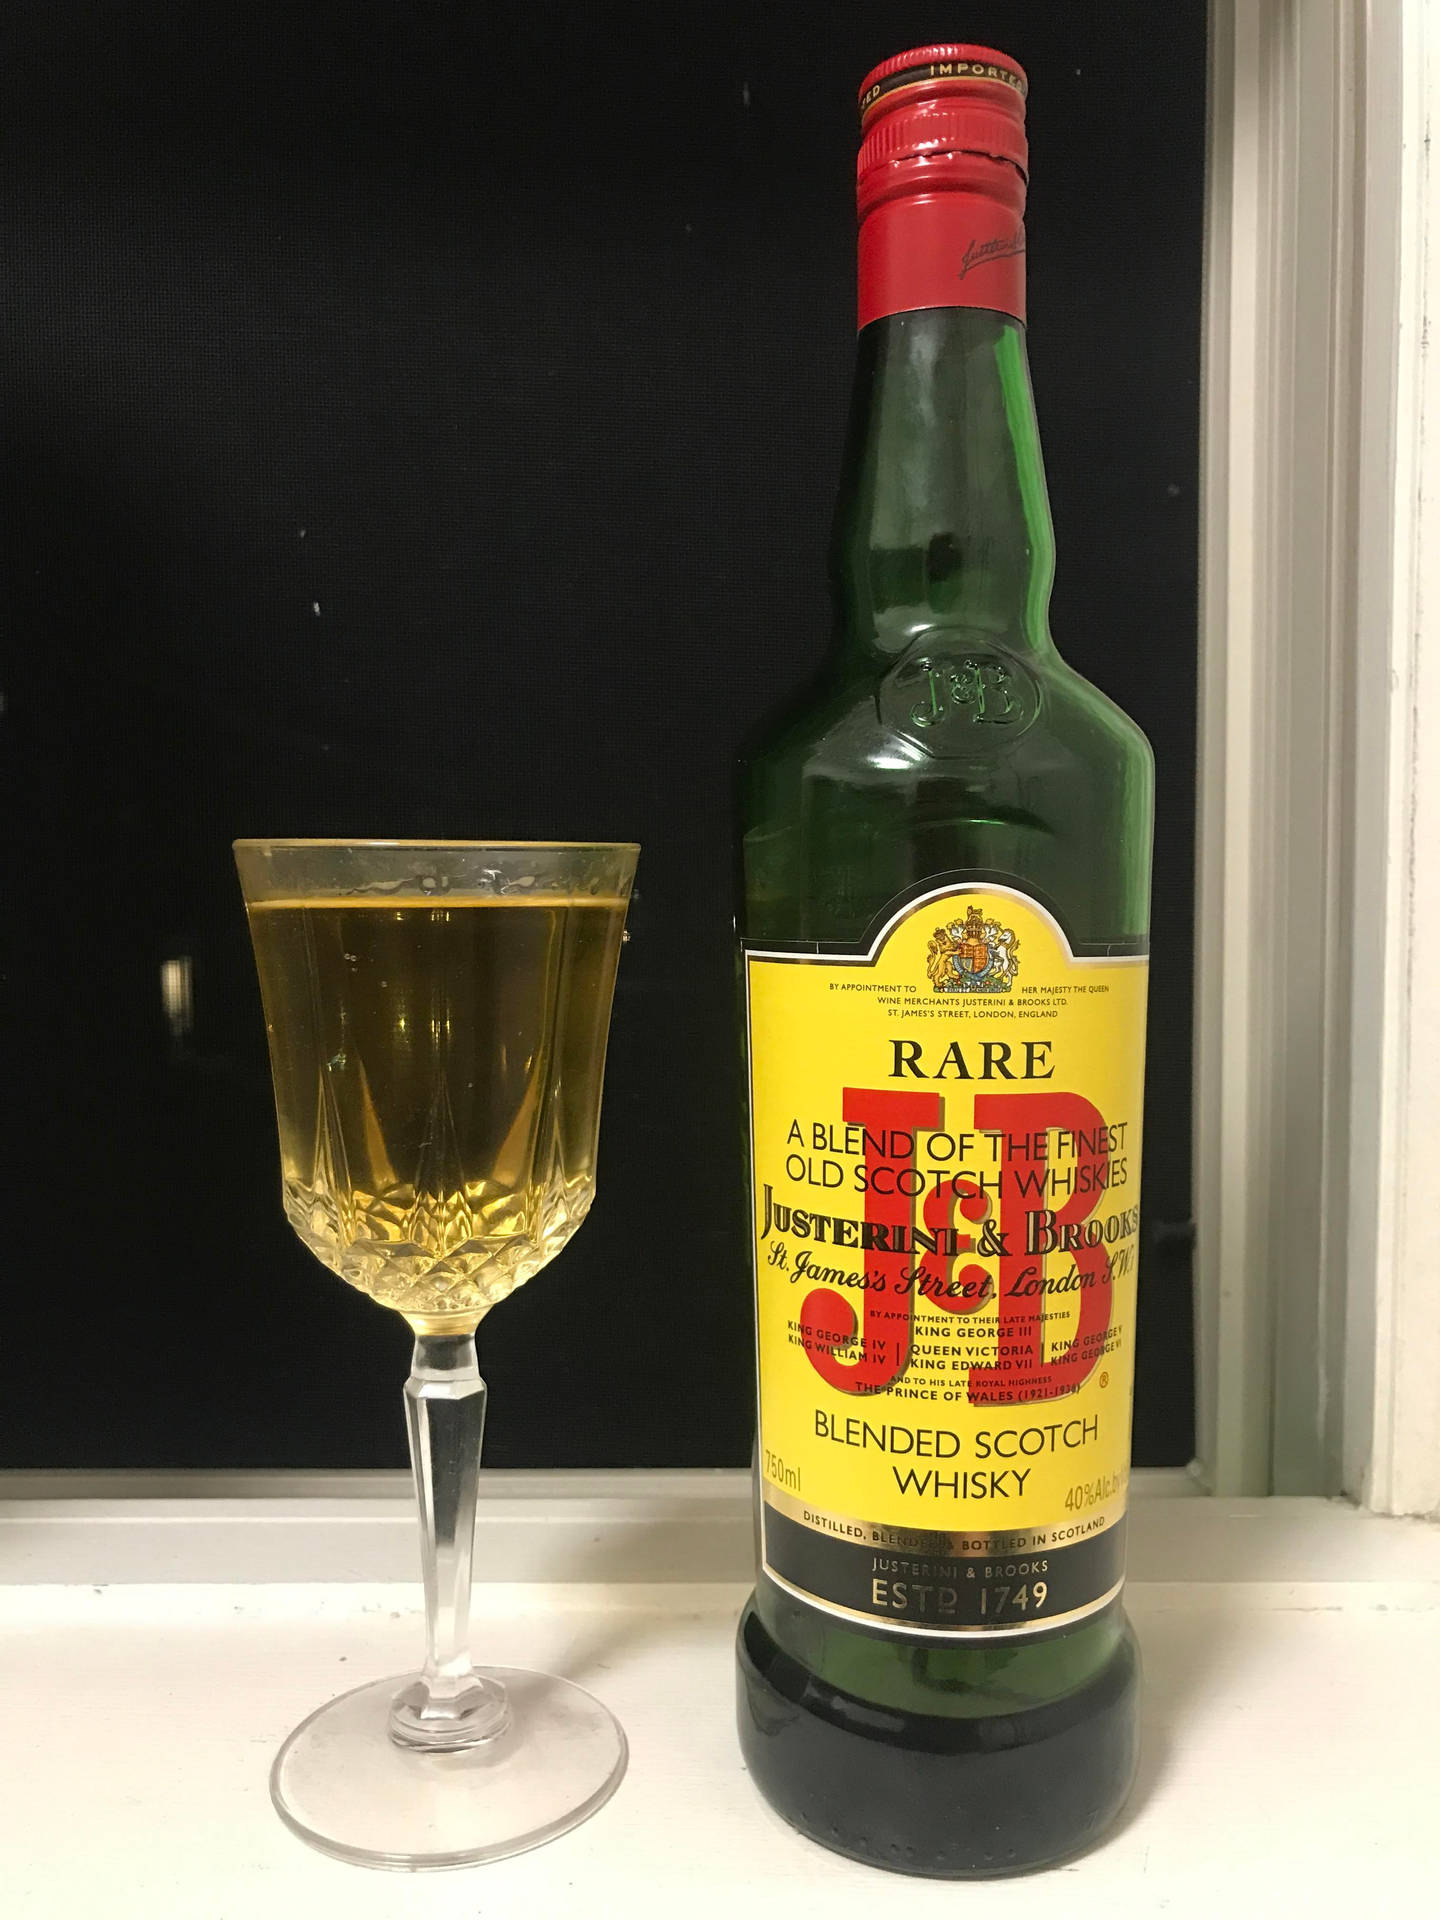 J&B Blended Scotch Whisky Bottle with Glass Wallpaper